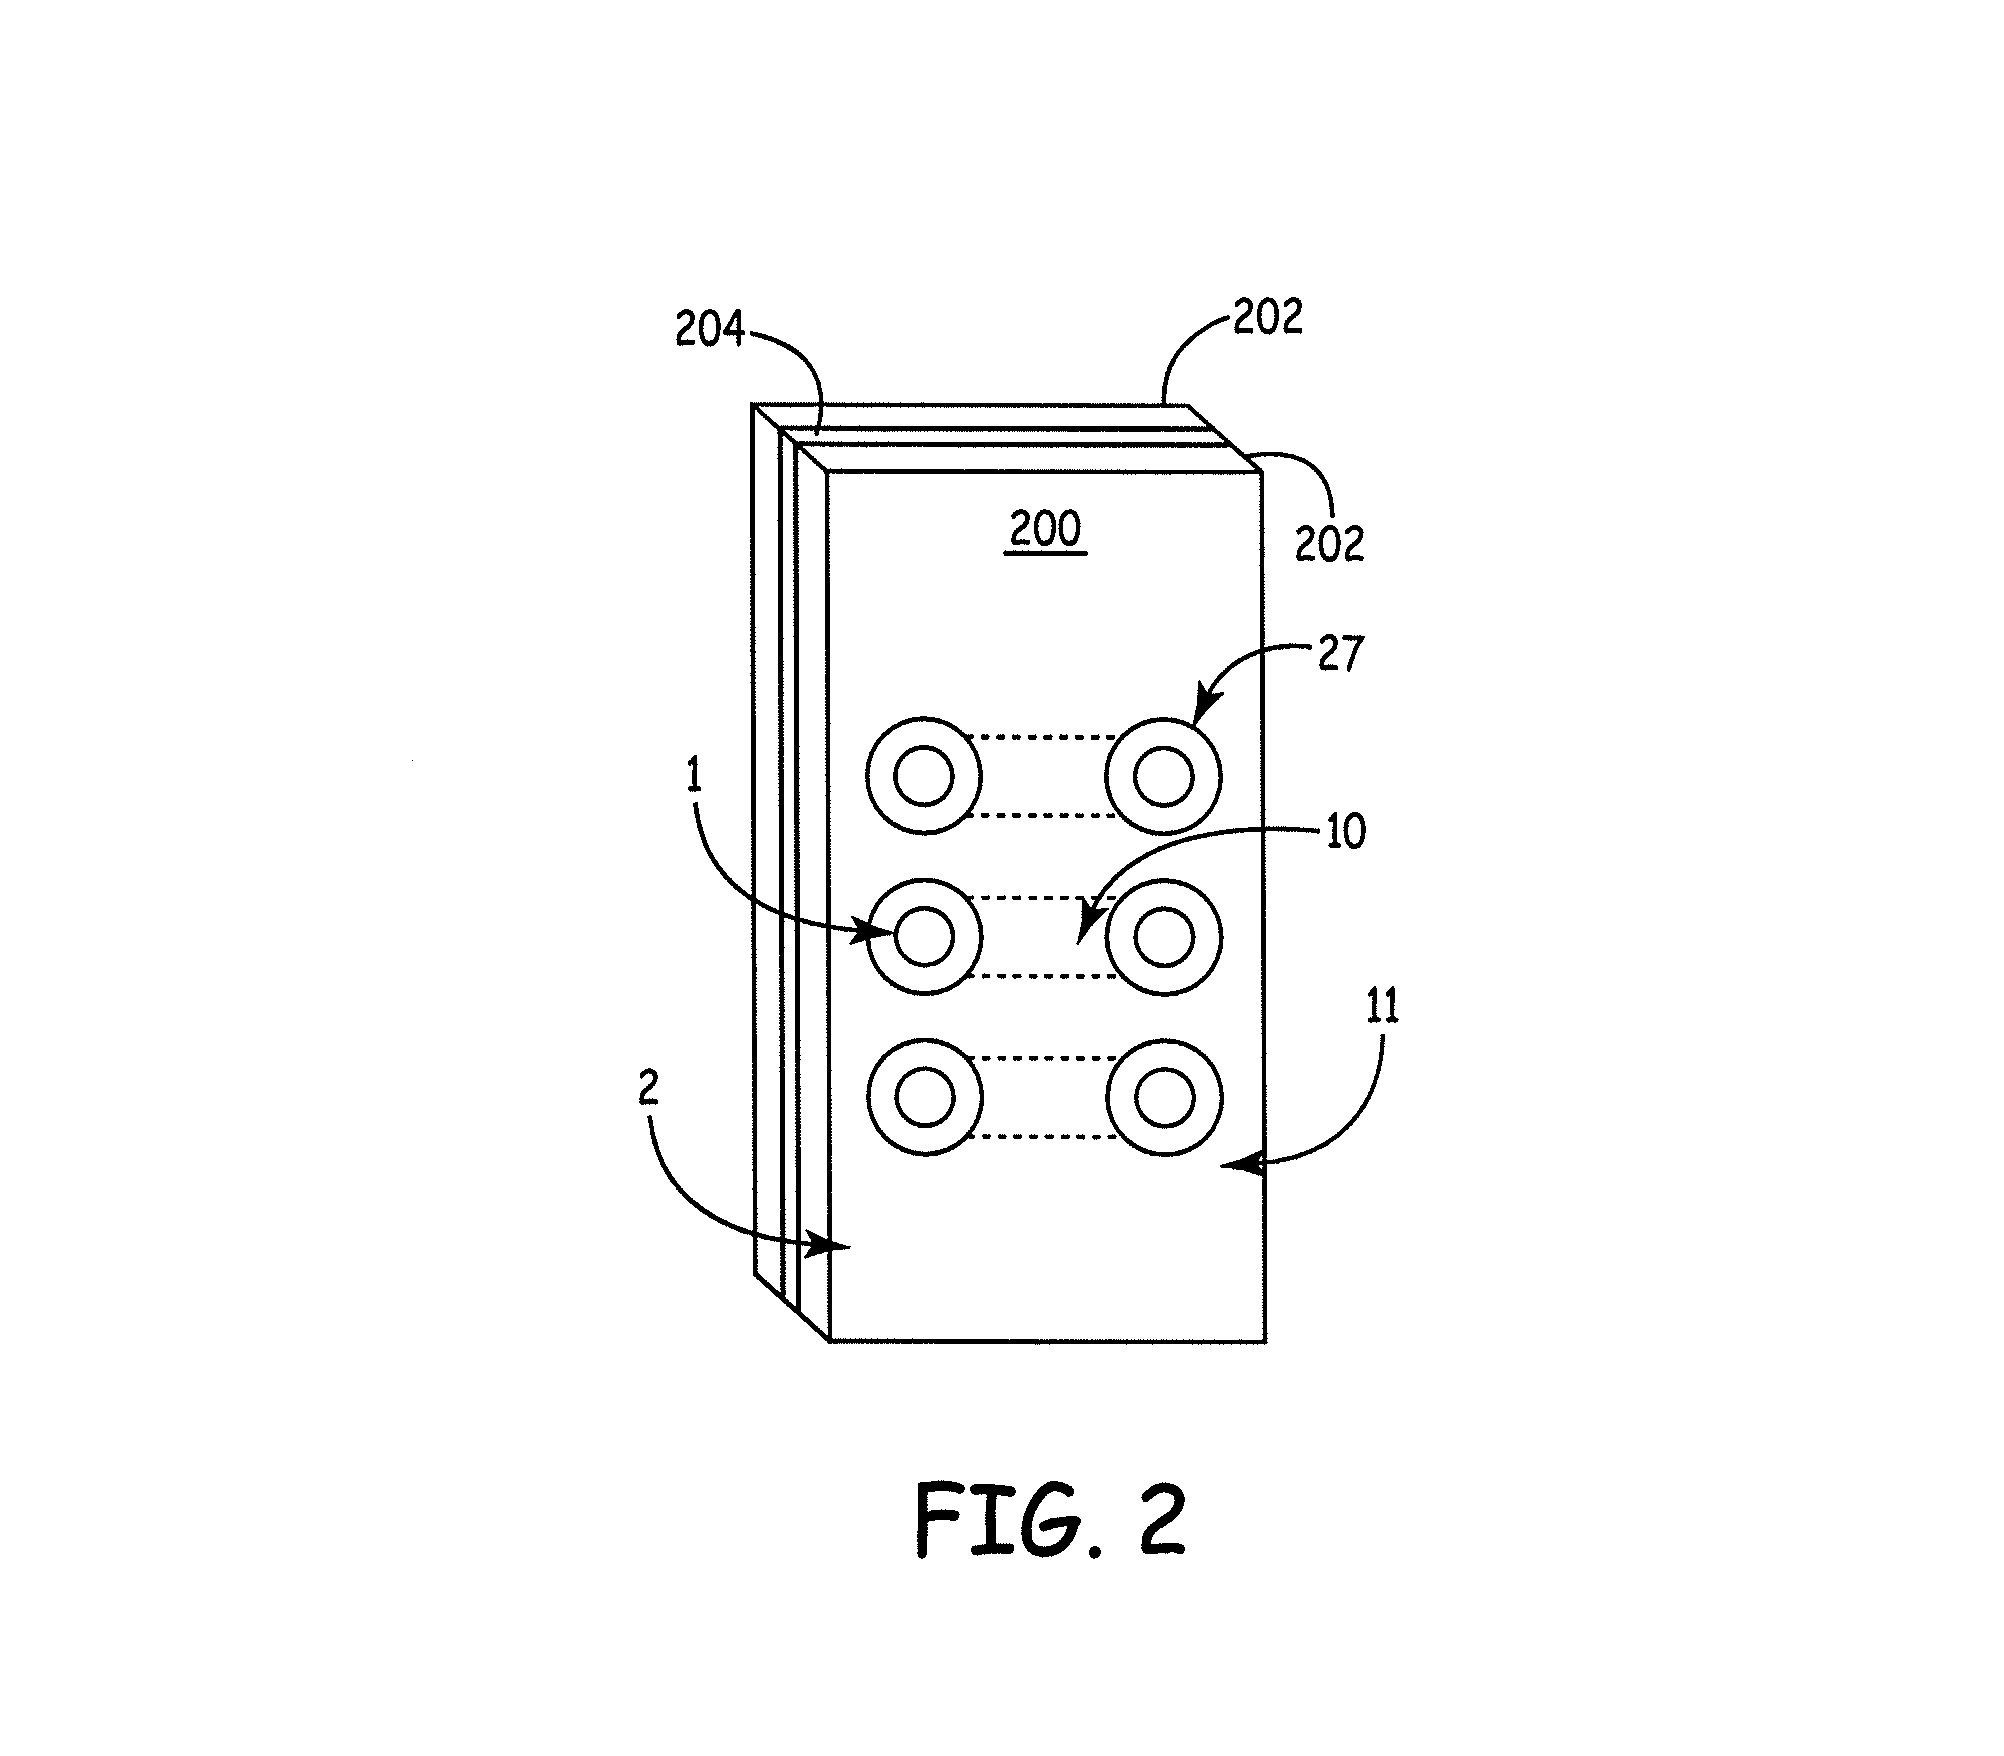 Printed circuit board flexible interconnect design